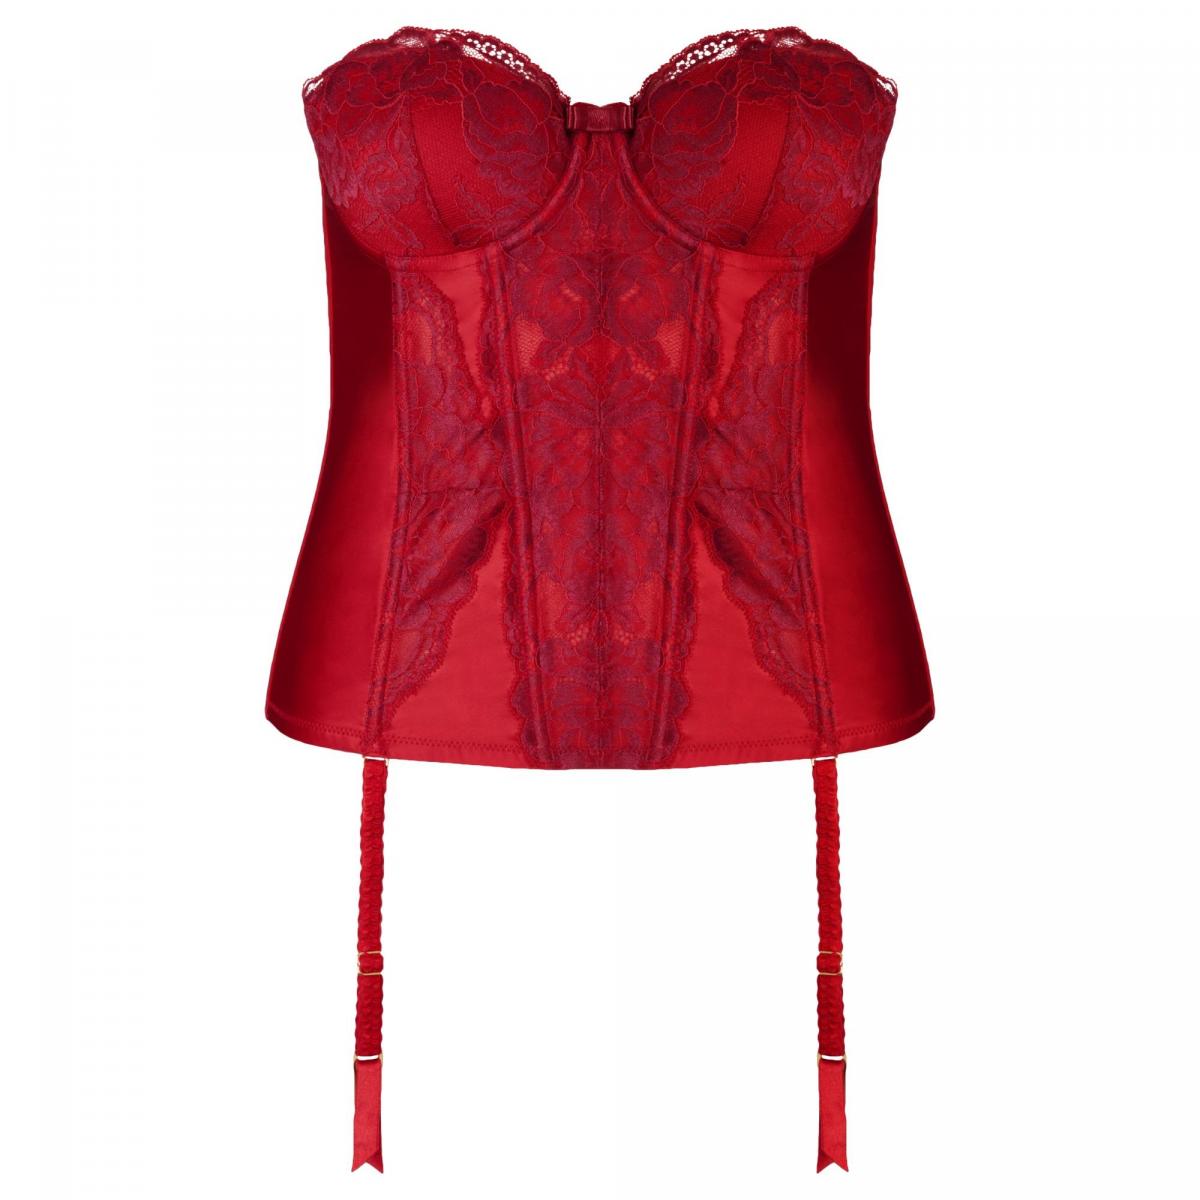 John Lewis, Collection scarlet lace basque, £60